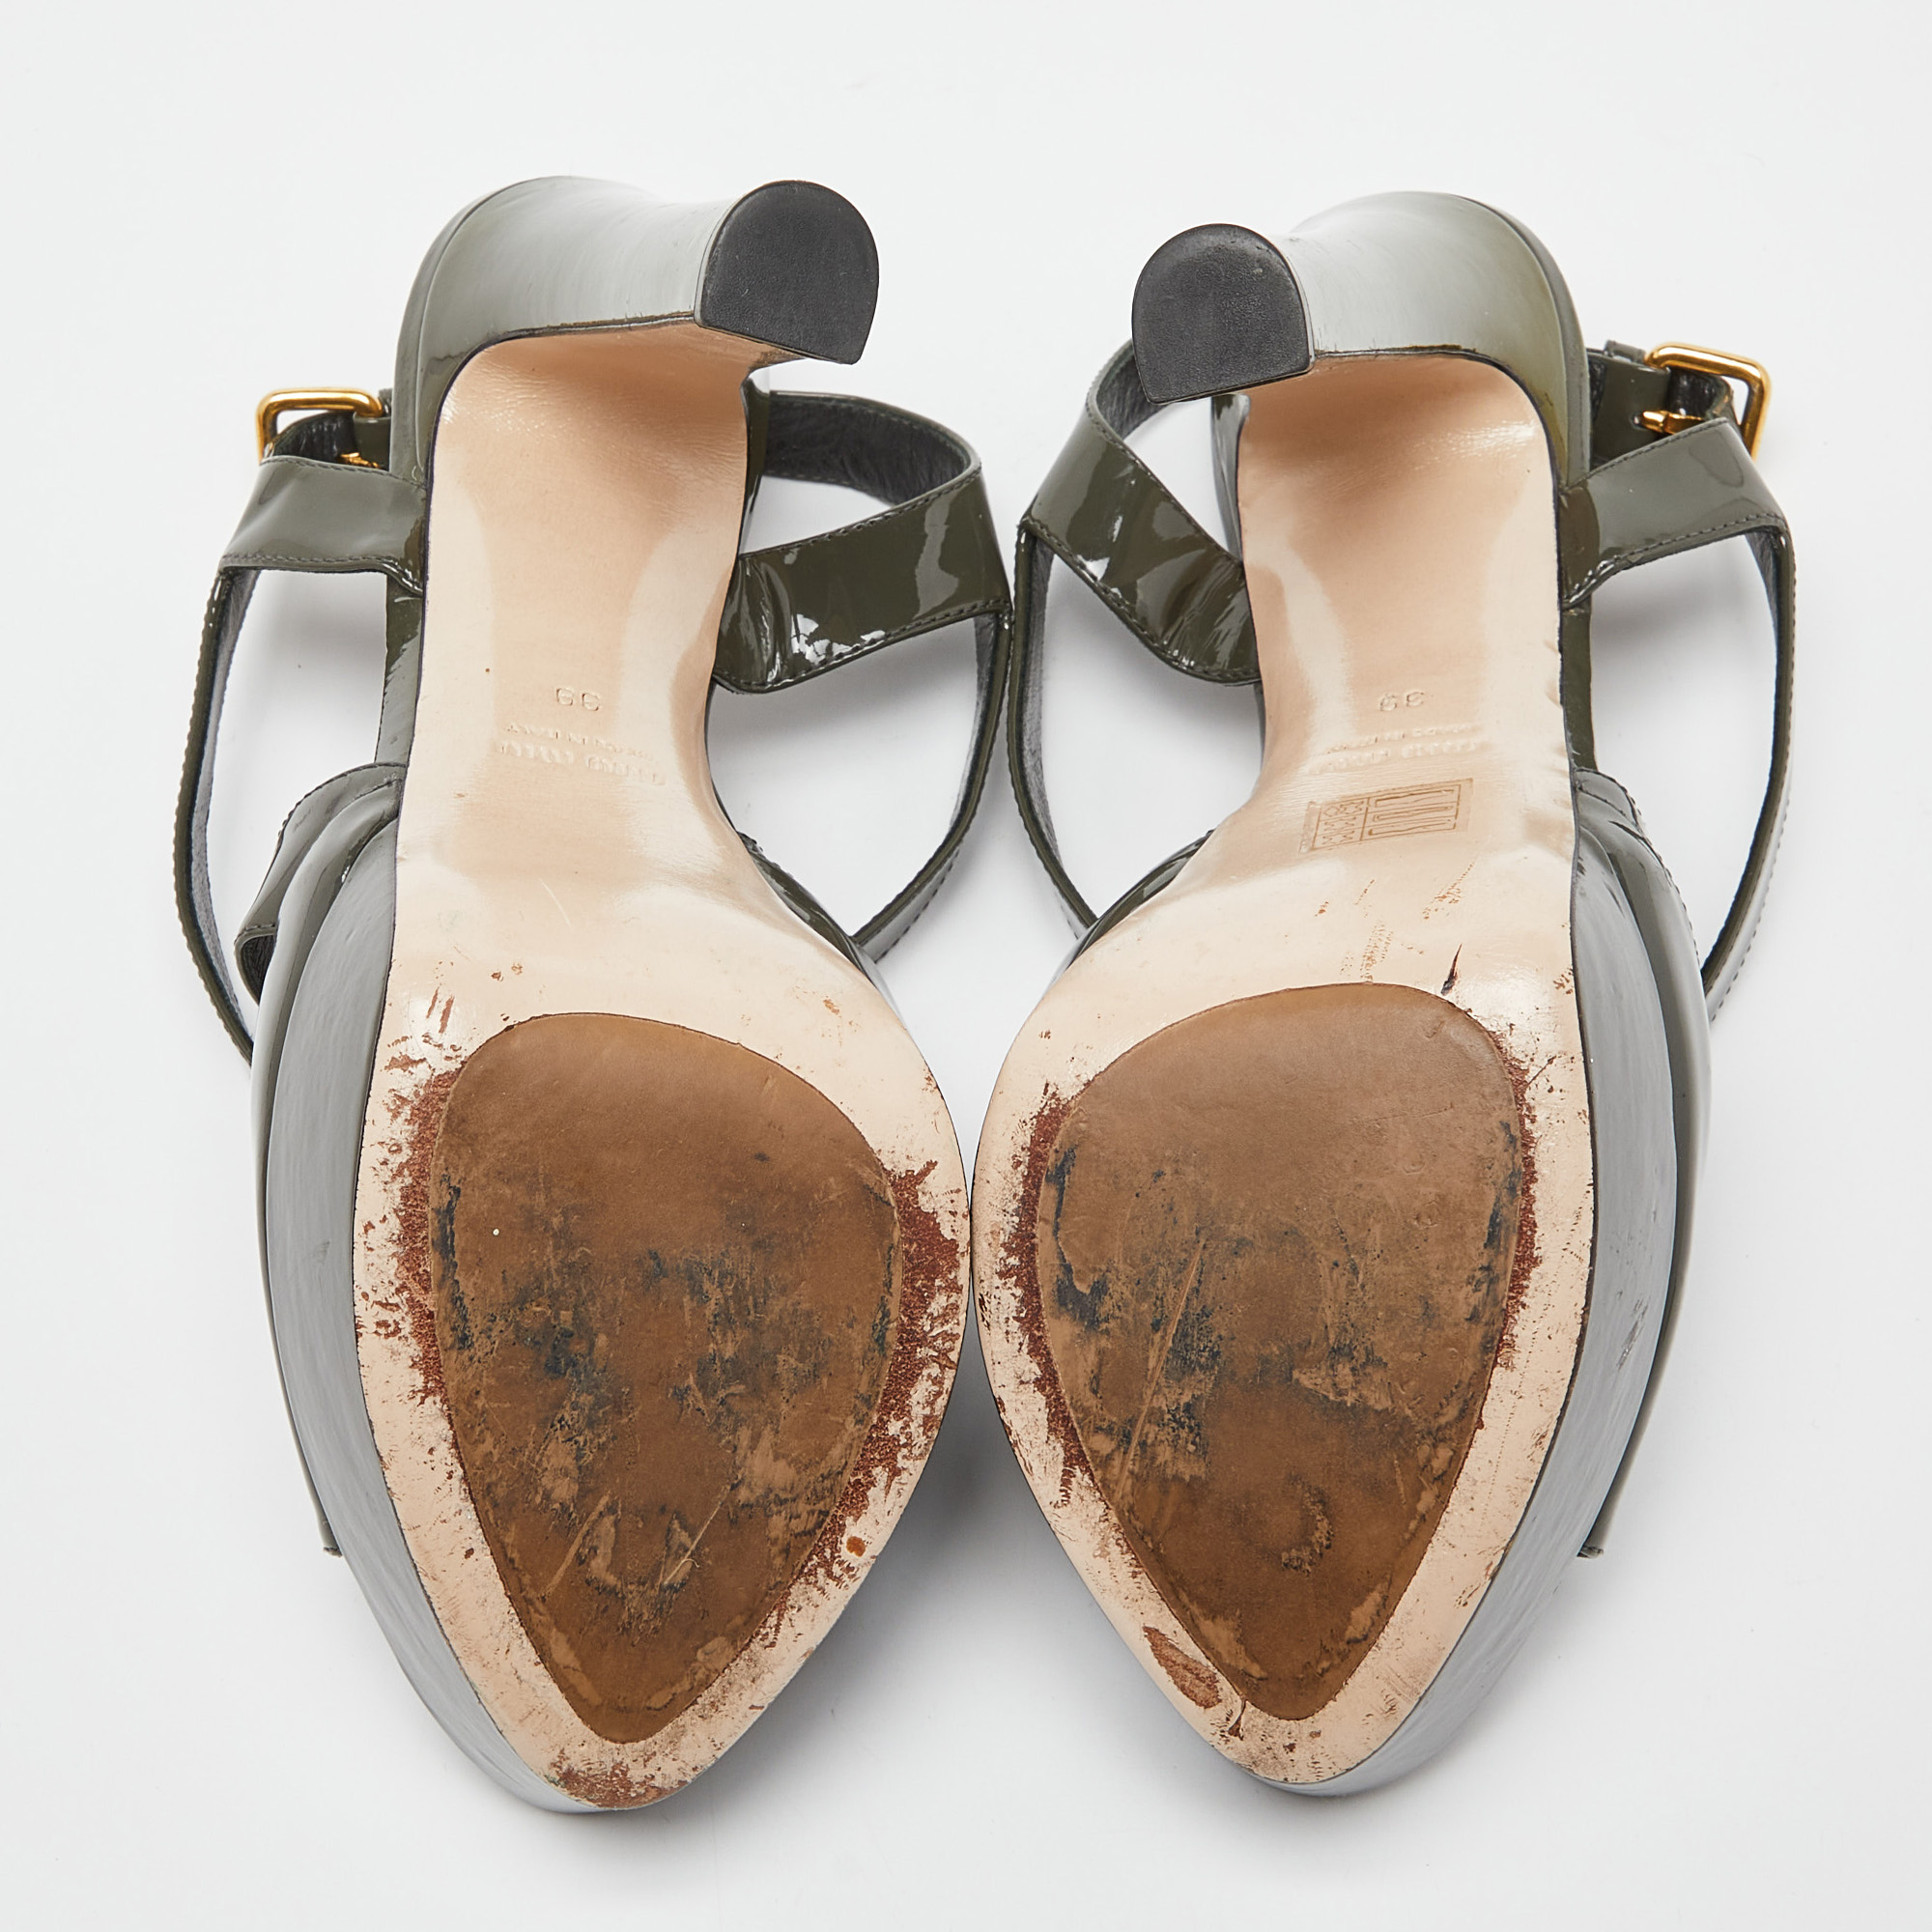 Miu Miu Olive Green Patent Leather Platform Ankle Cross Strap Sandals Size 39